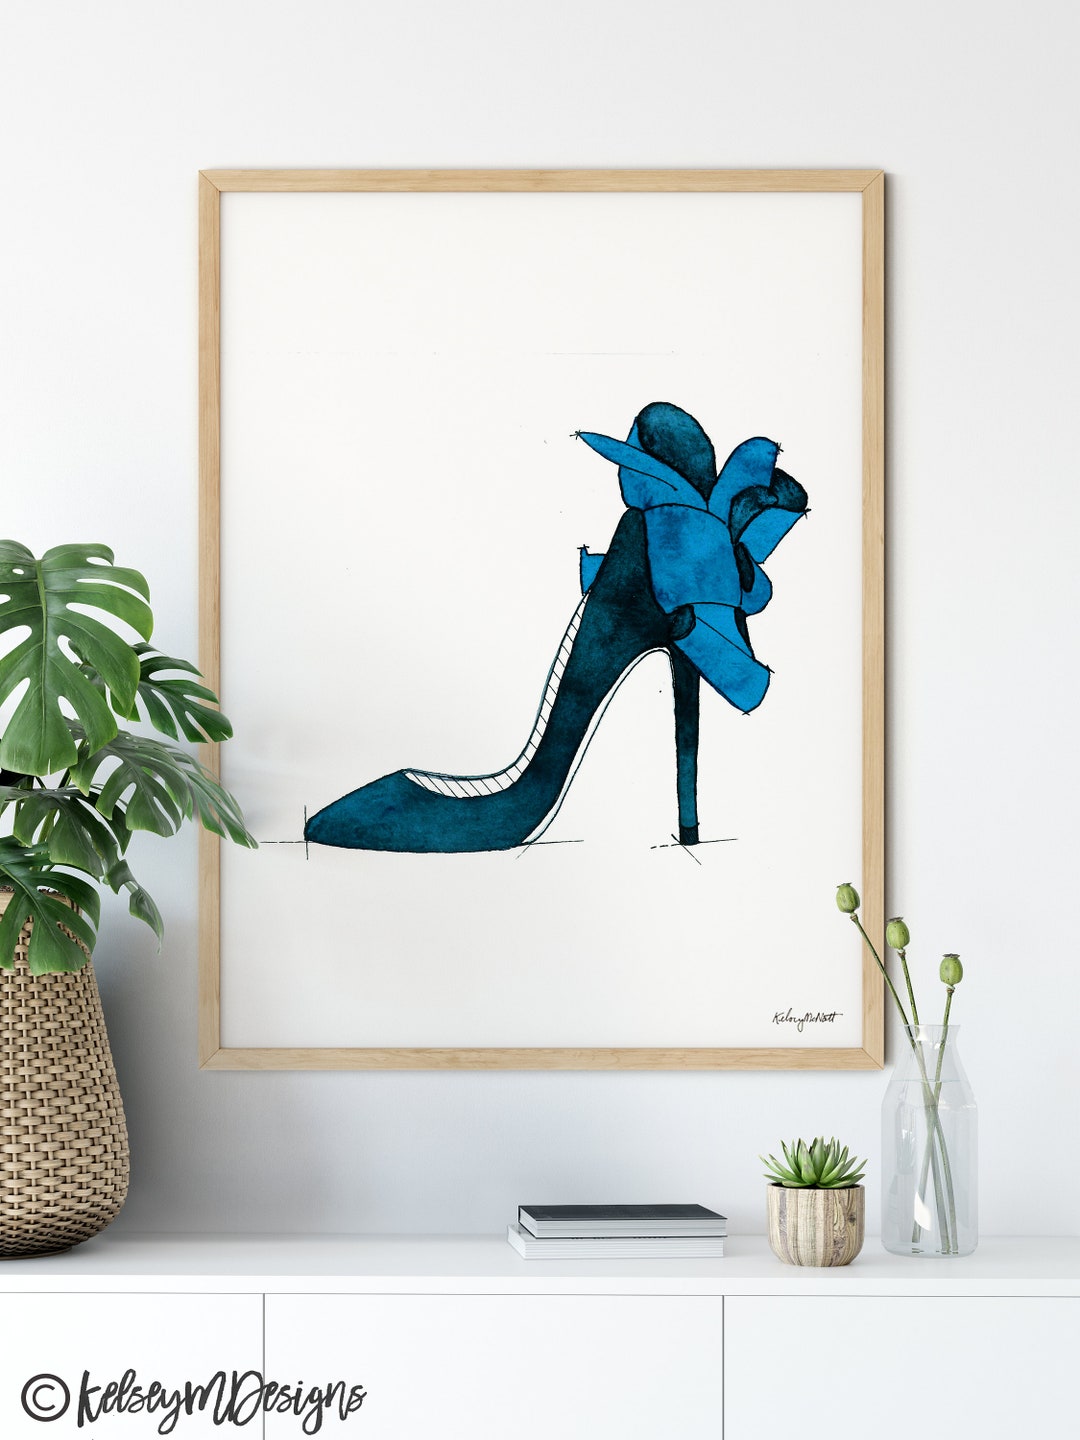 Louboutin High Heels Wall Art Fashion Illustration - Etsy